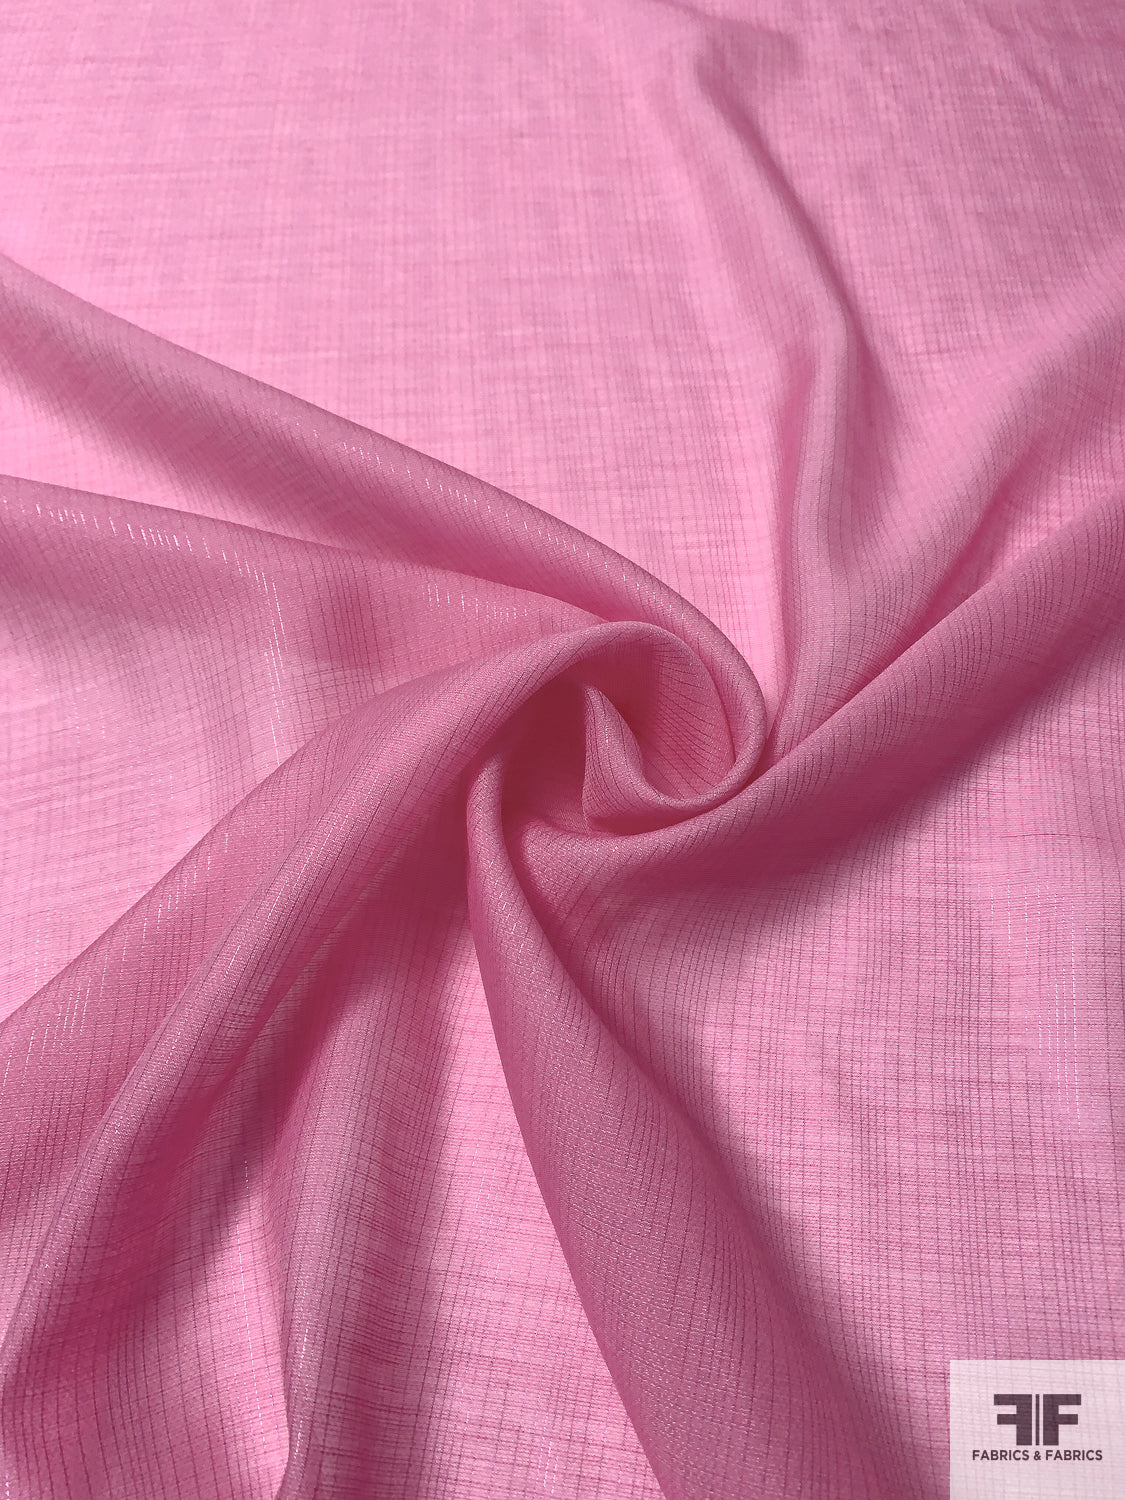 Sheer Fabrics from Rose Brand